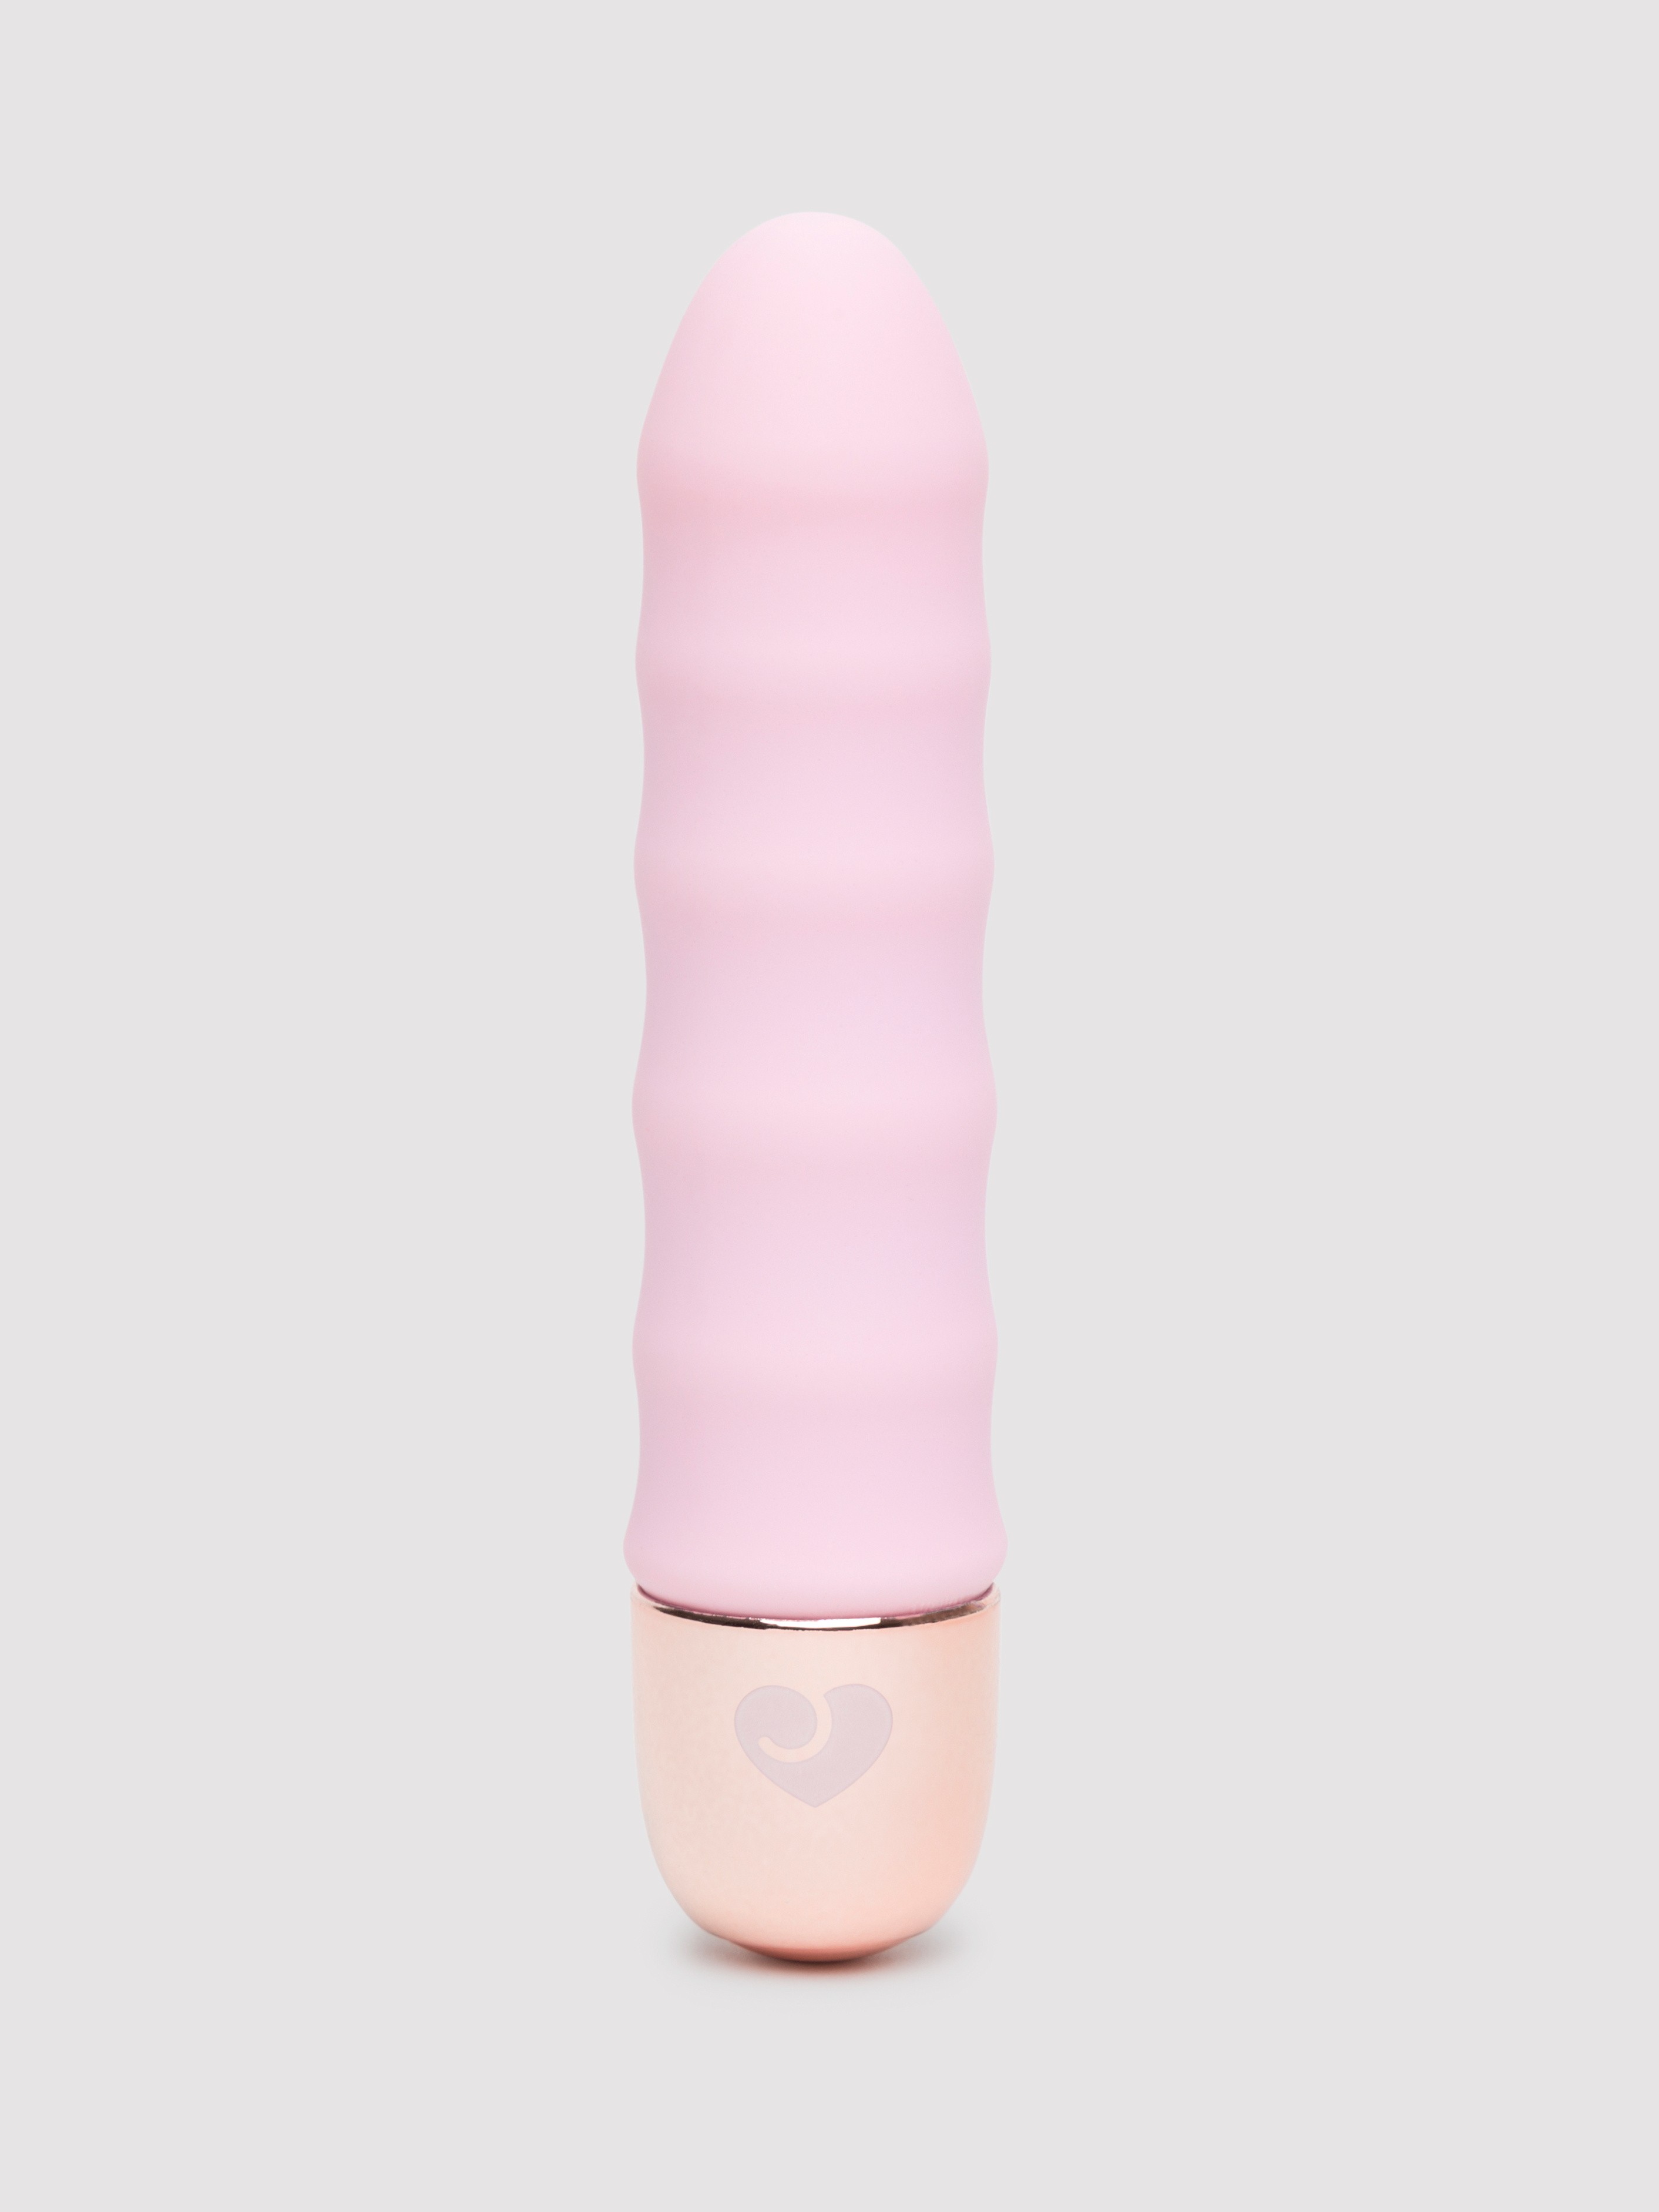 My new pink vibrator going deep